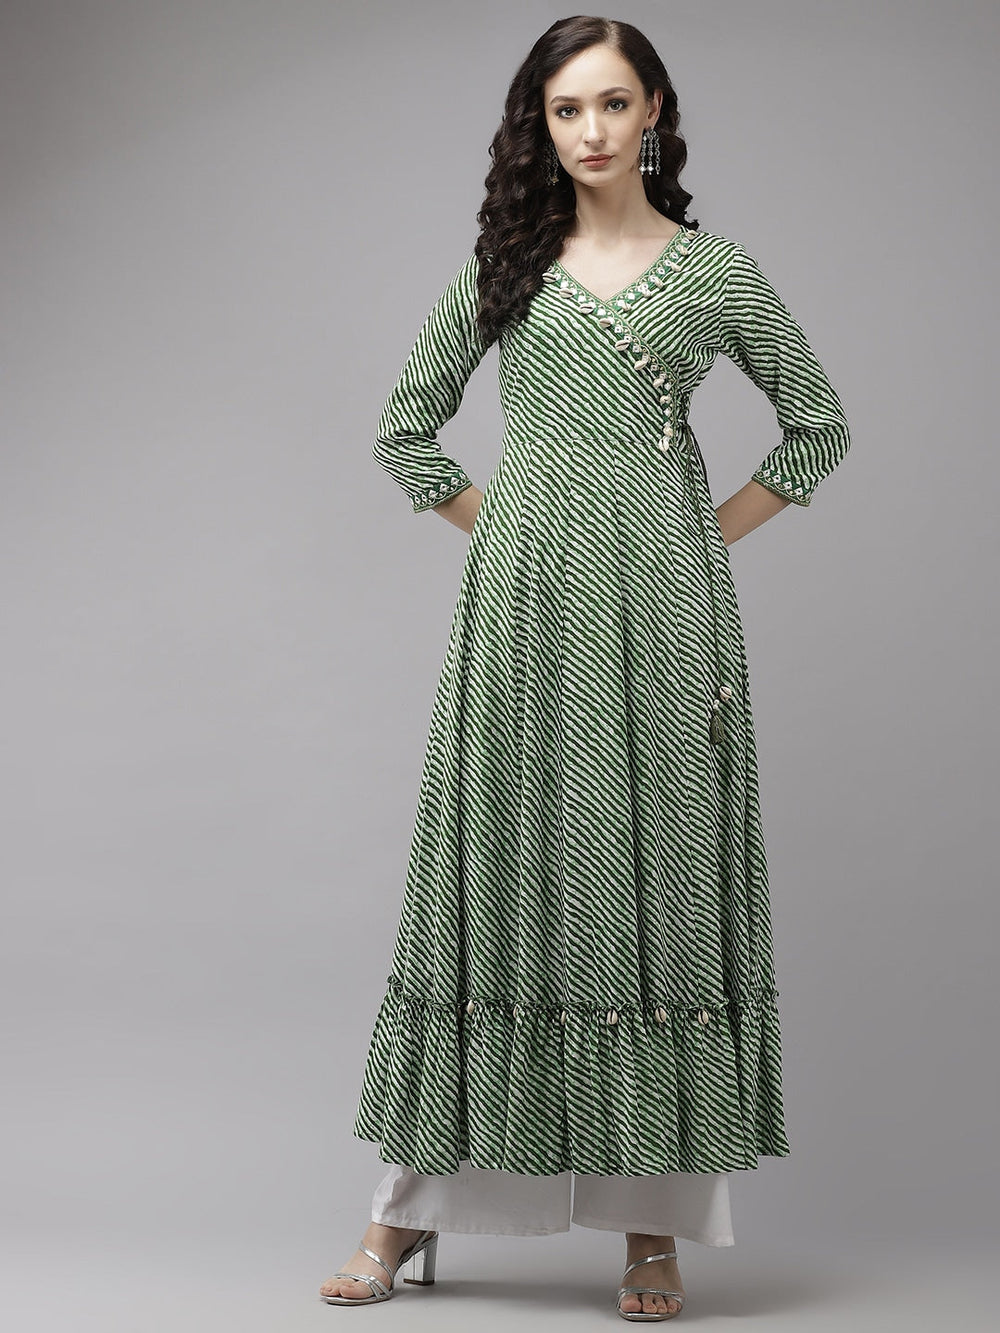 Green Leheriya Printed Dress-Yufta Store-9201DRSGRS